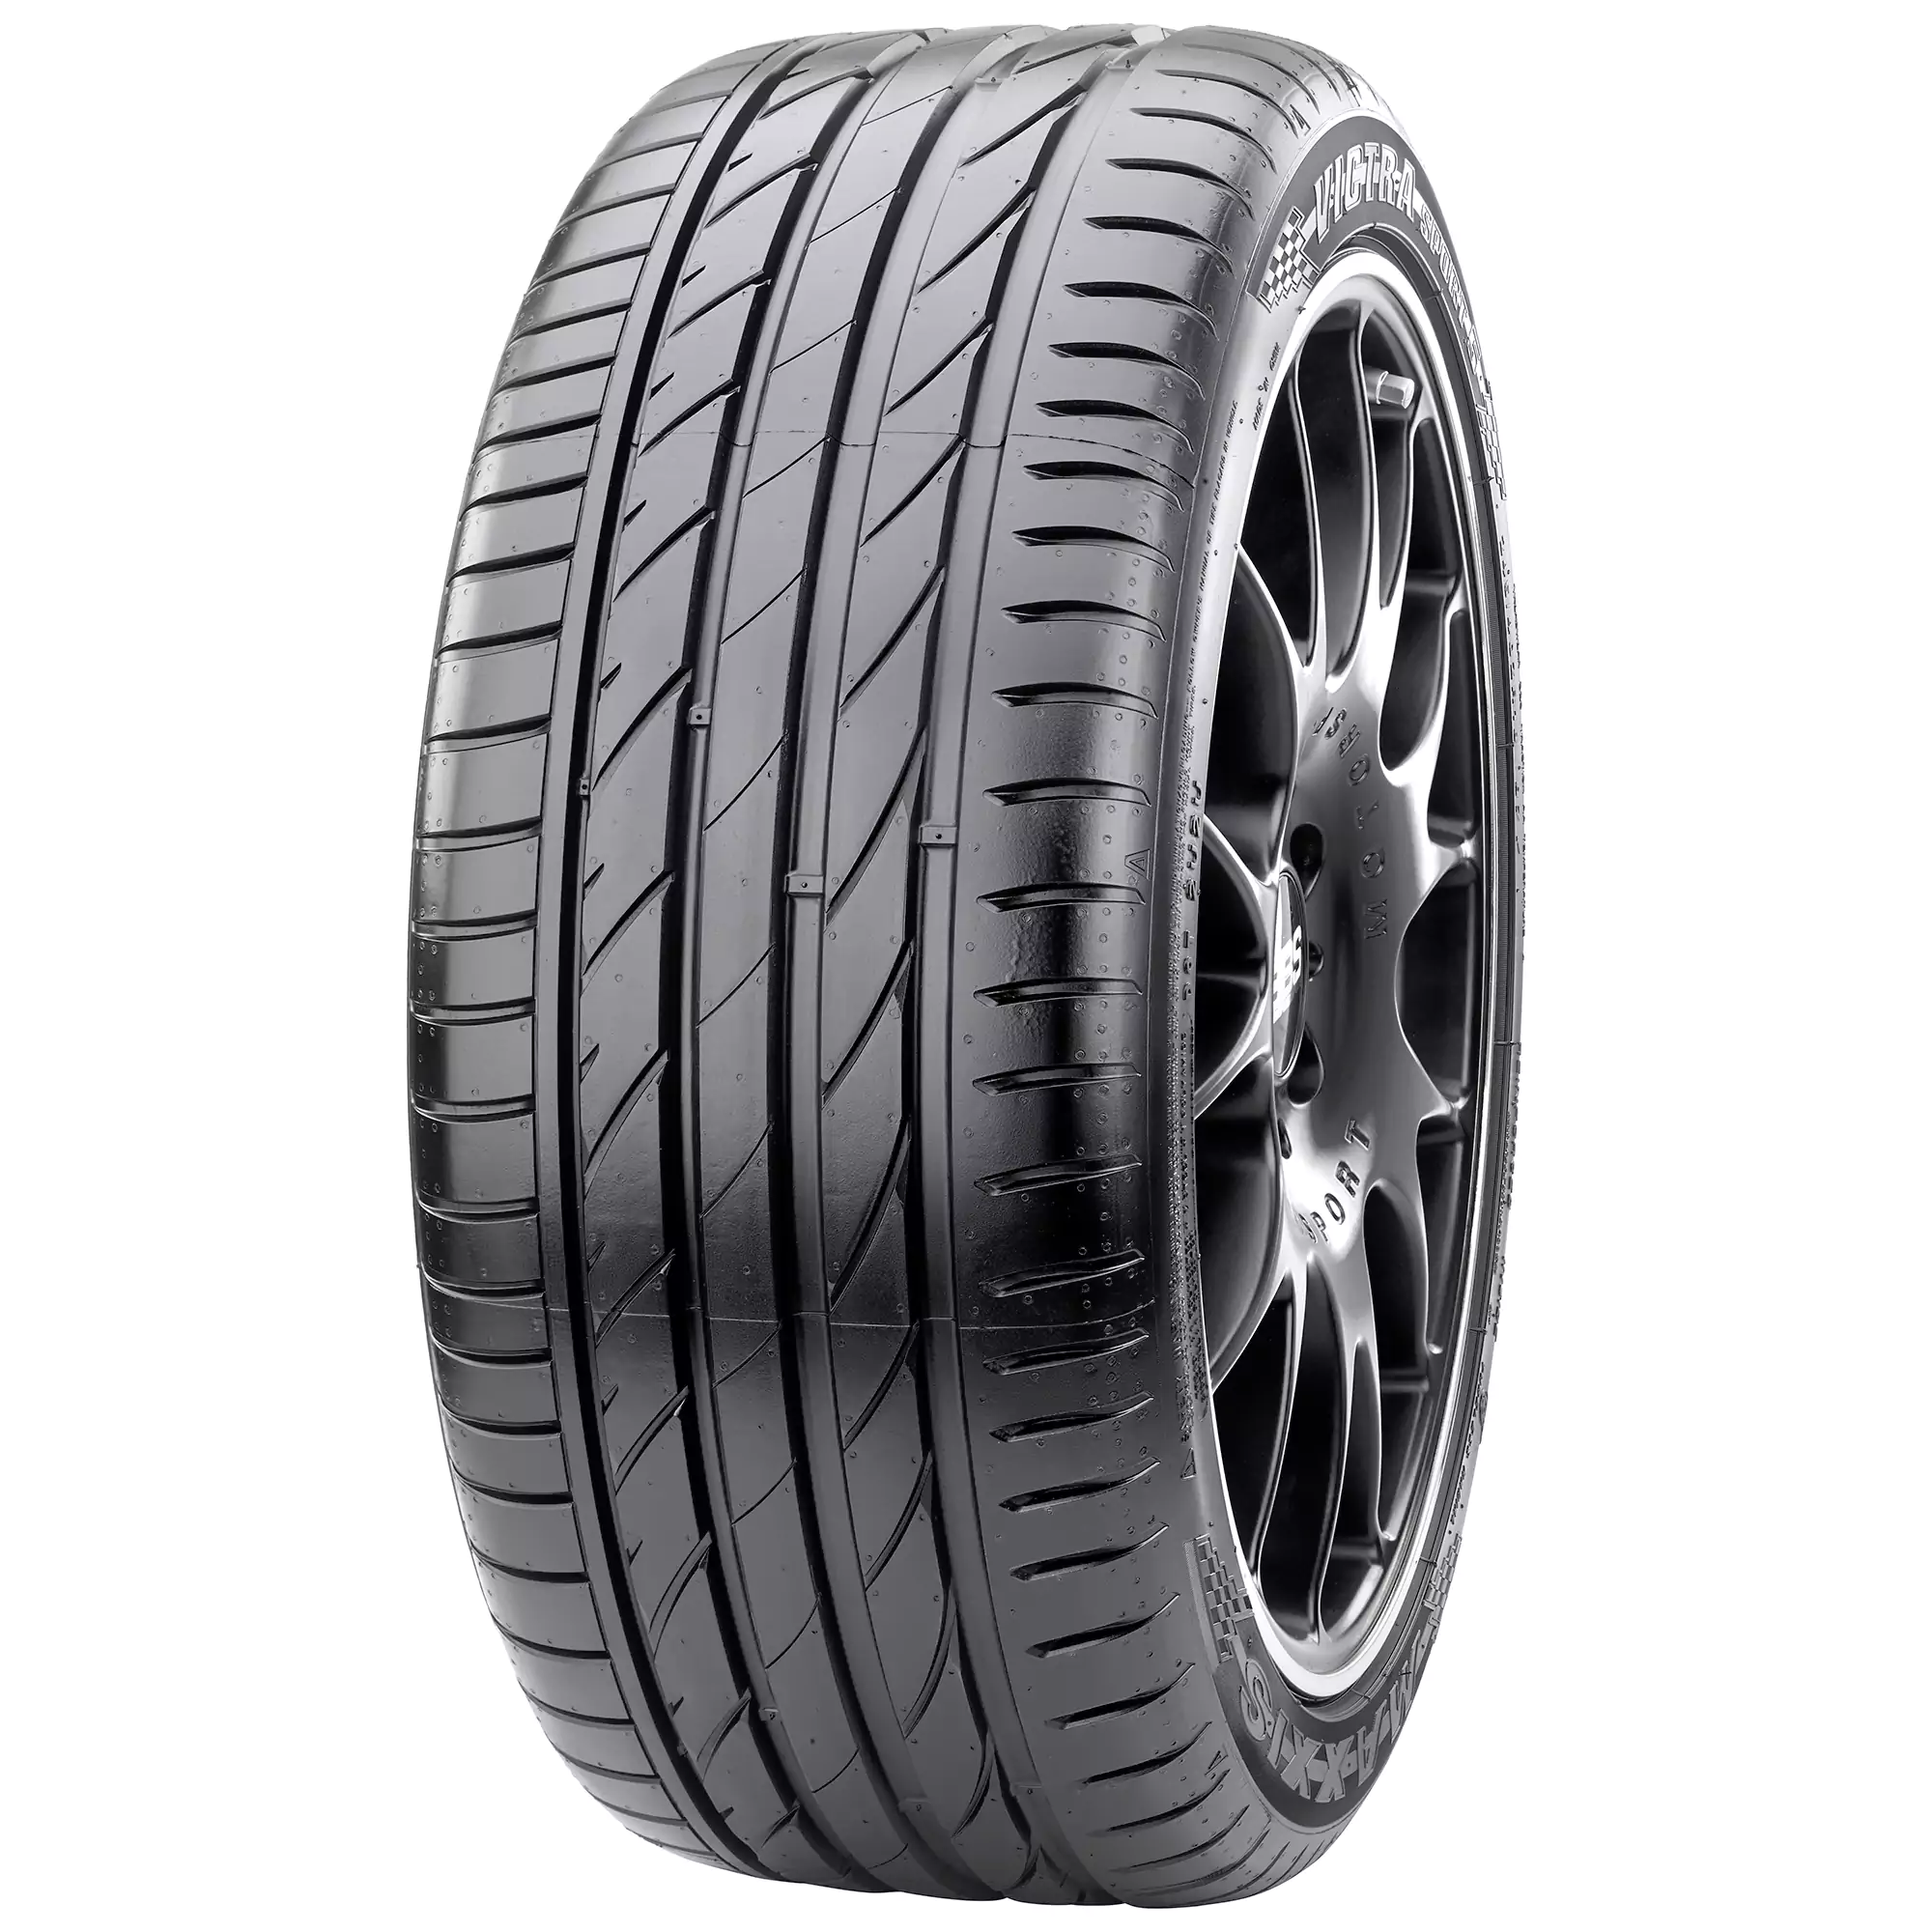 | Car All-Season Passenger Tyres Premitra Maxxis AP3 Tyres |